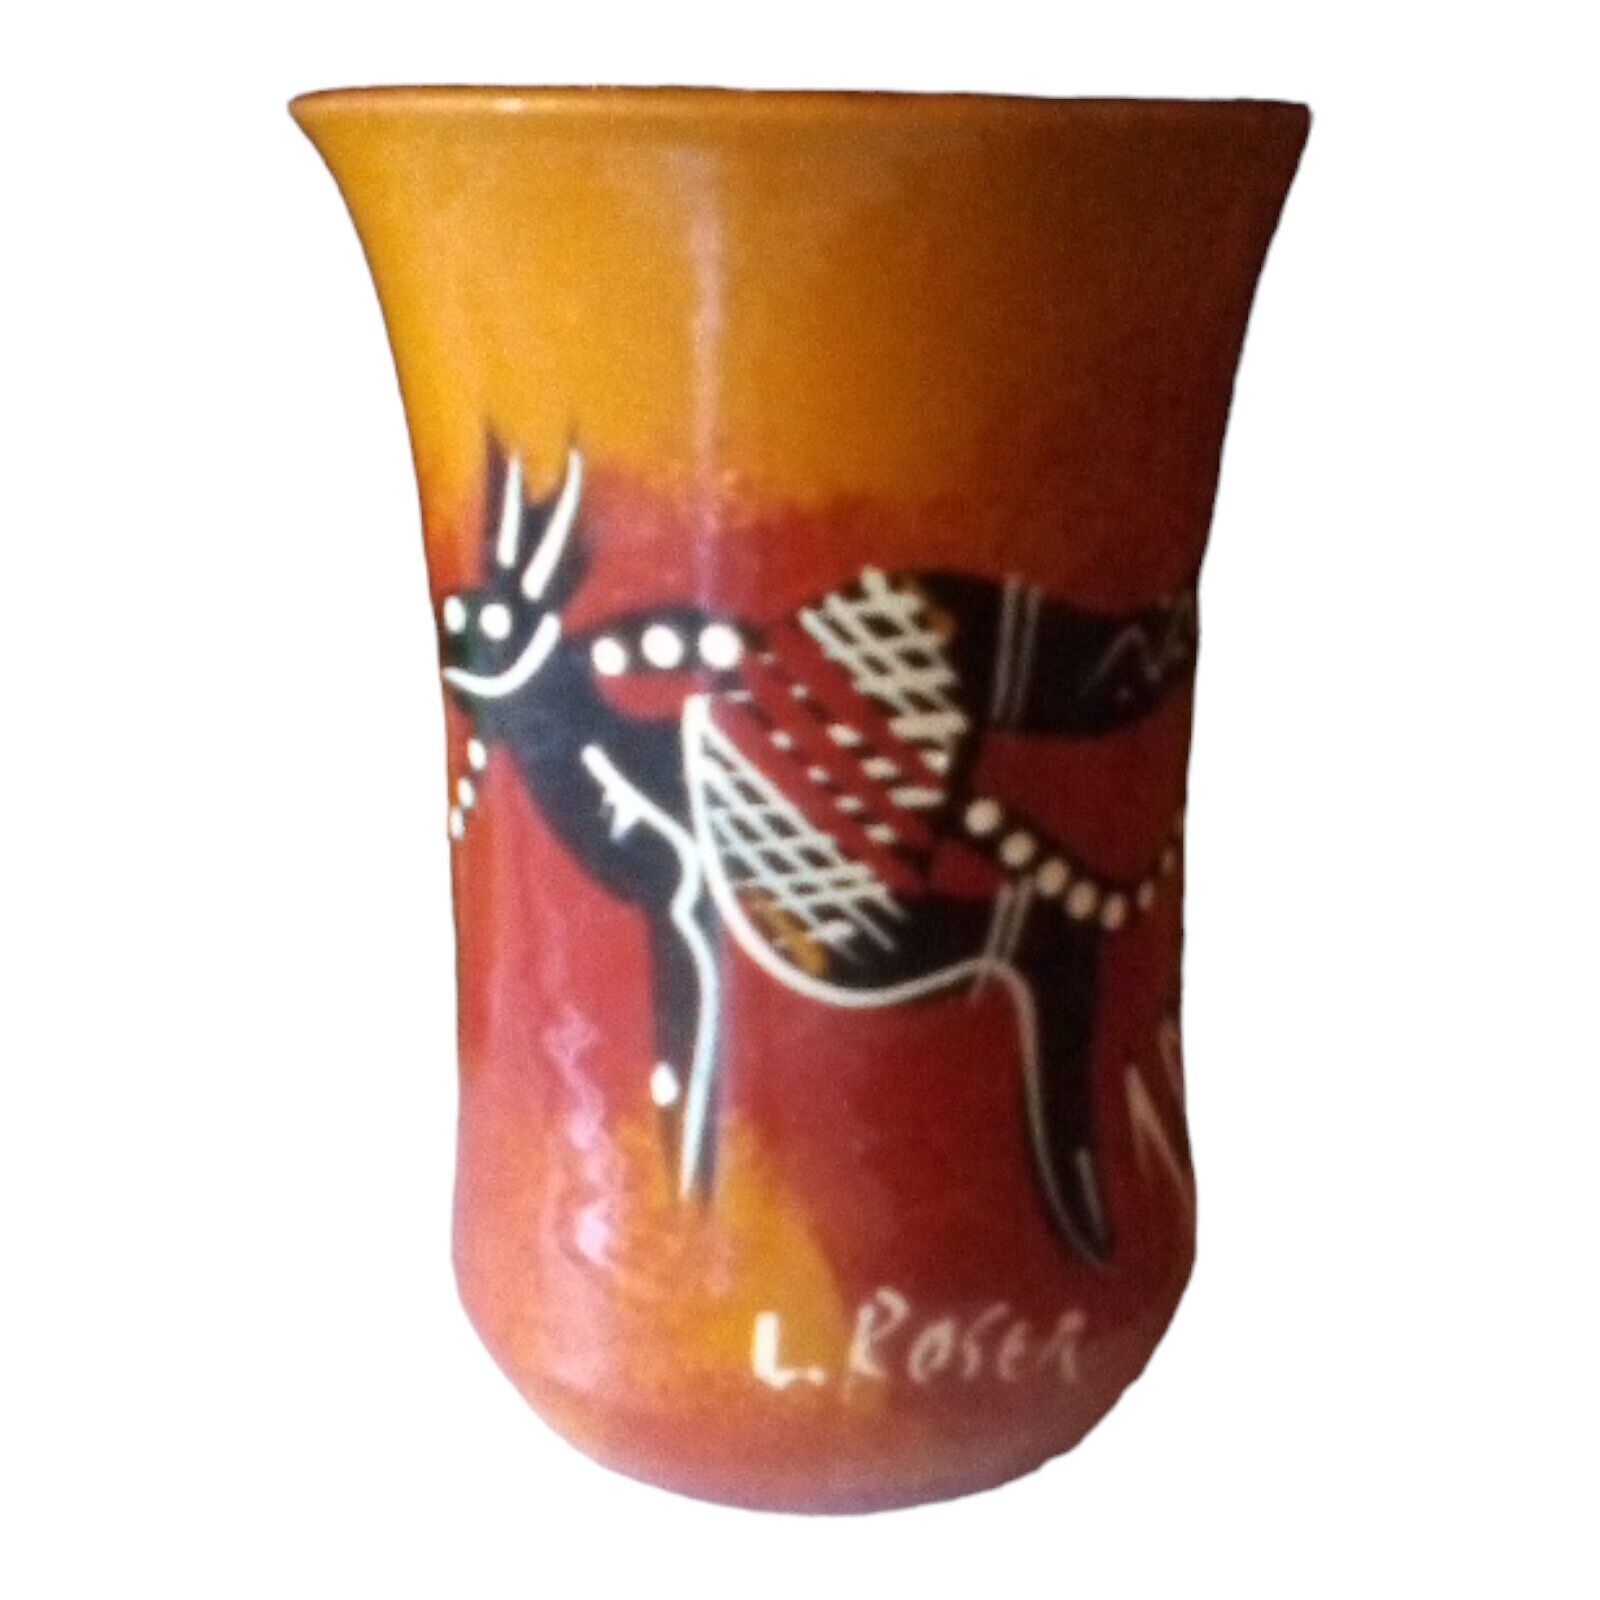 Art pottery vase Australia Aboriginal kangaroo lizard signed Leonie Roser...